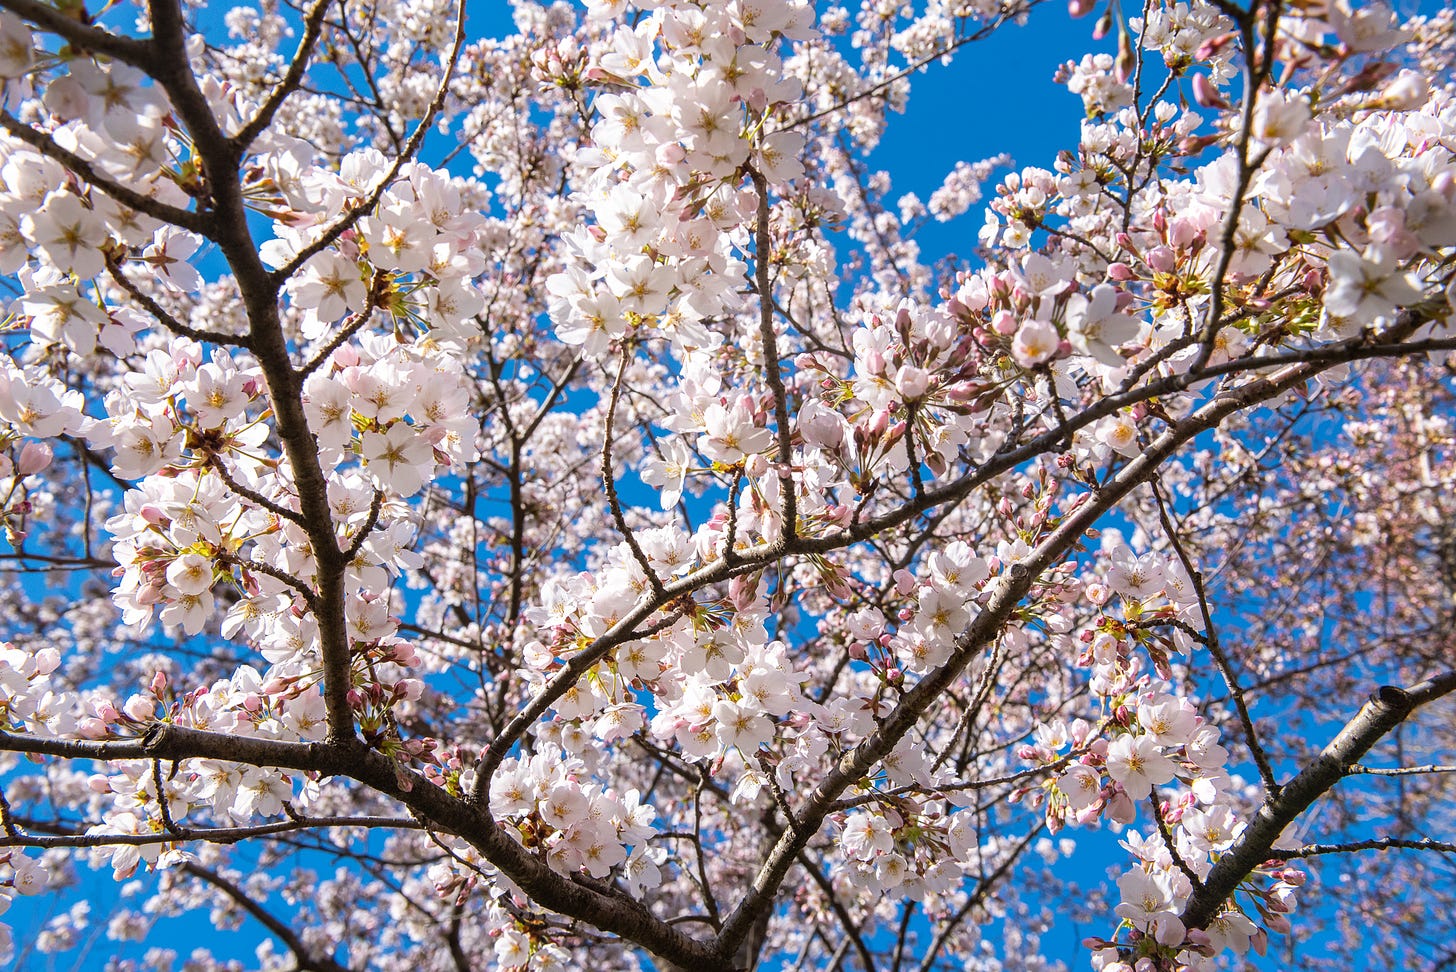 ID: Upward view of lighter pink cherry blossoms